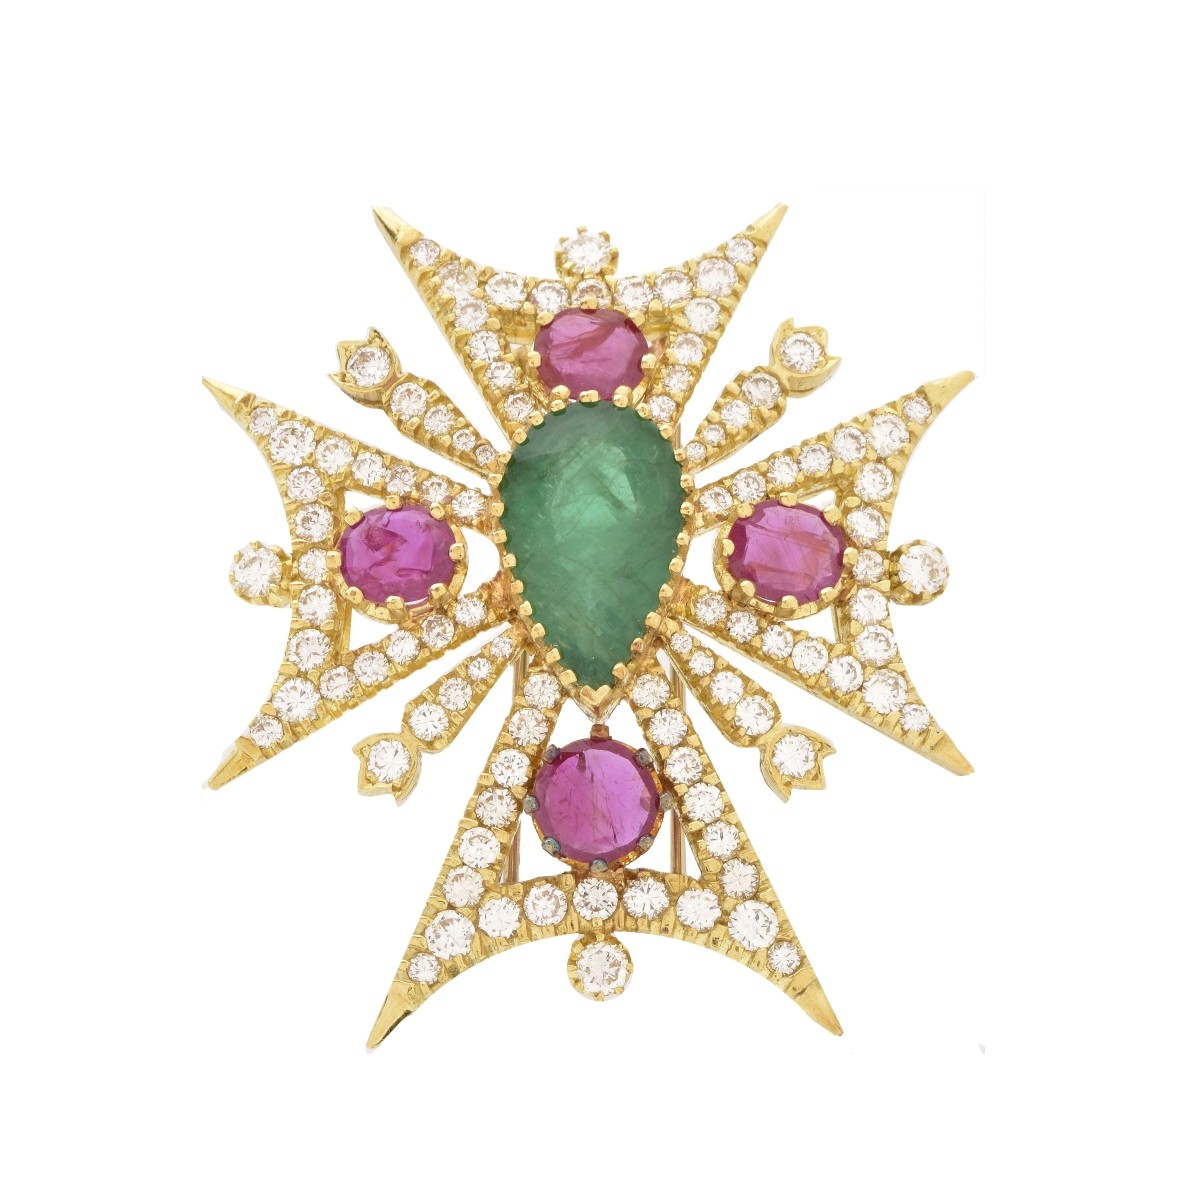 Emerald, Ruby, Diamond and 18K Cross Brooch